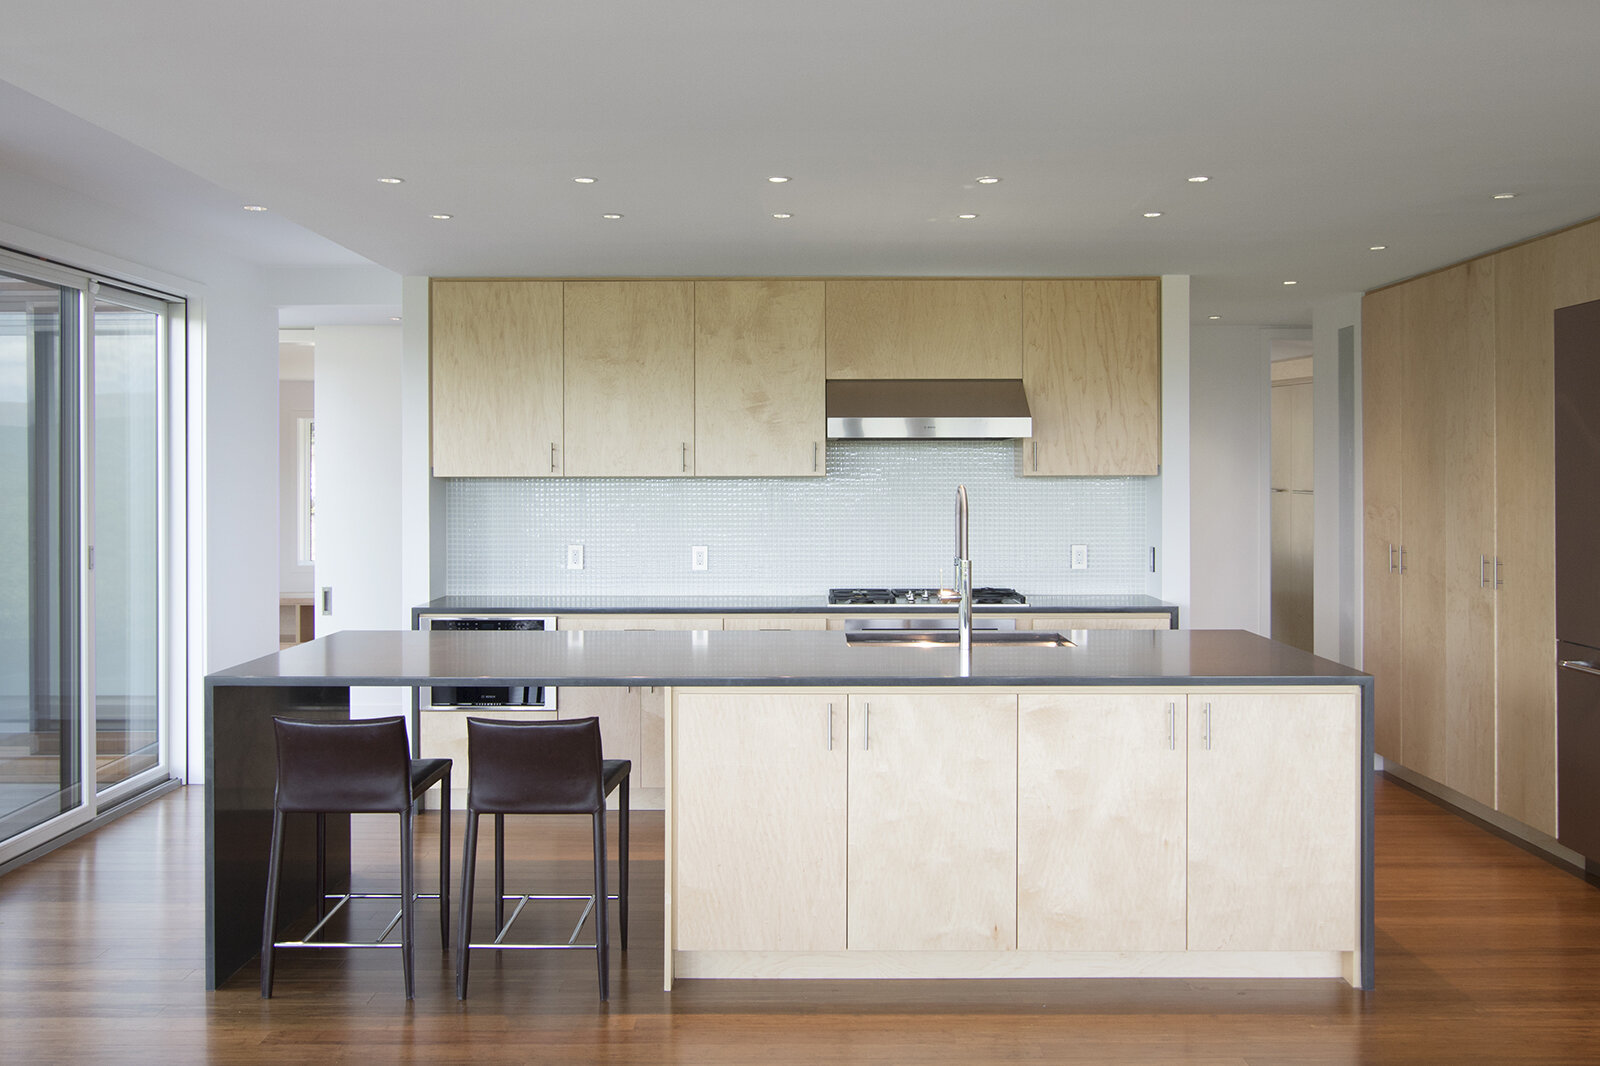 13-res4-re4a-resolution-4-architecture-modern-modular-prefab-sharon residence-interior-kitchen.jpg